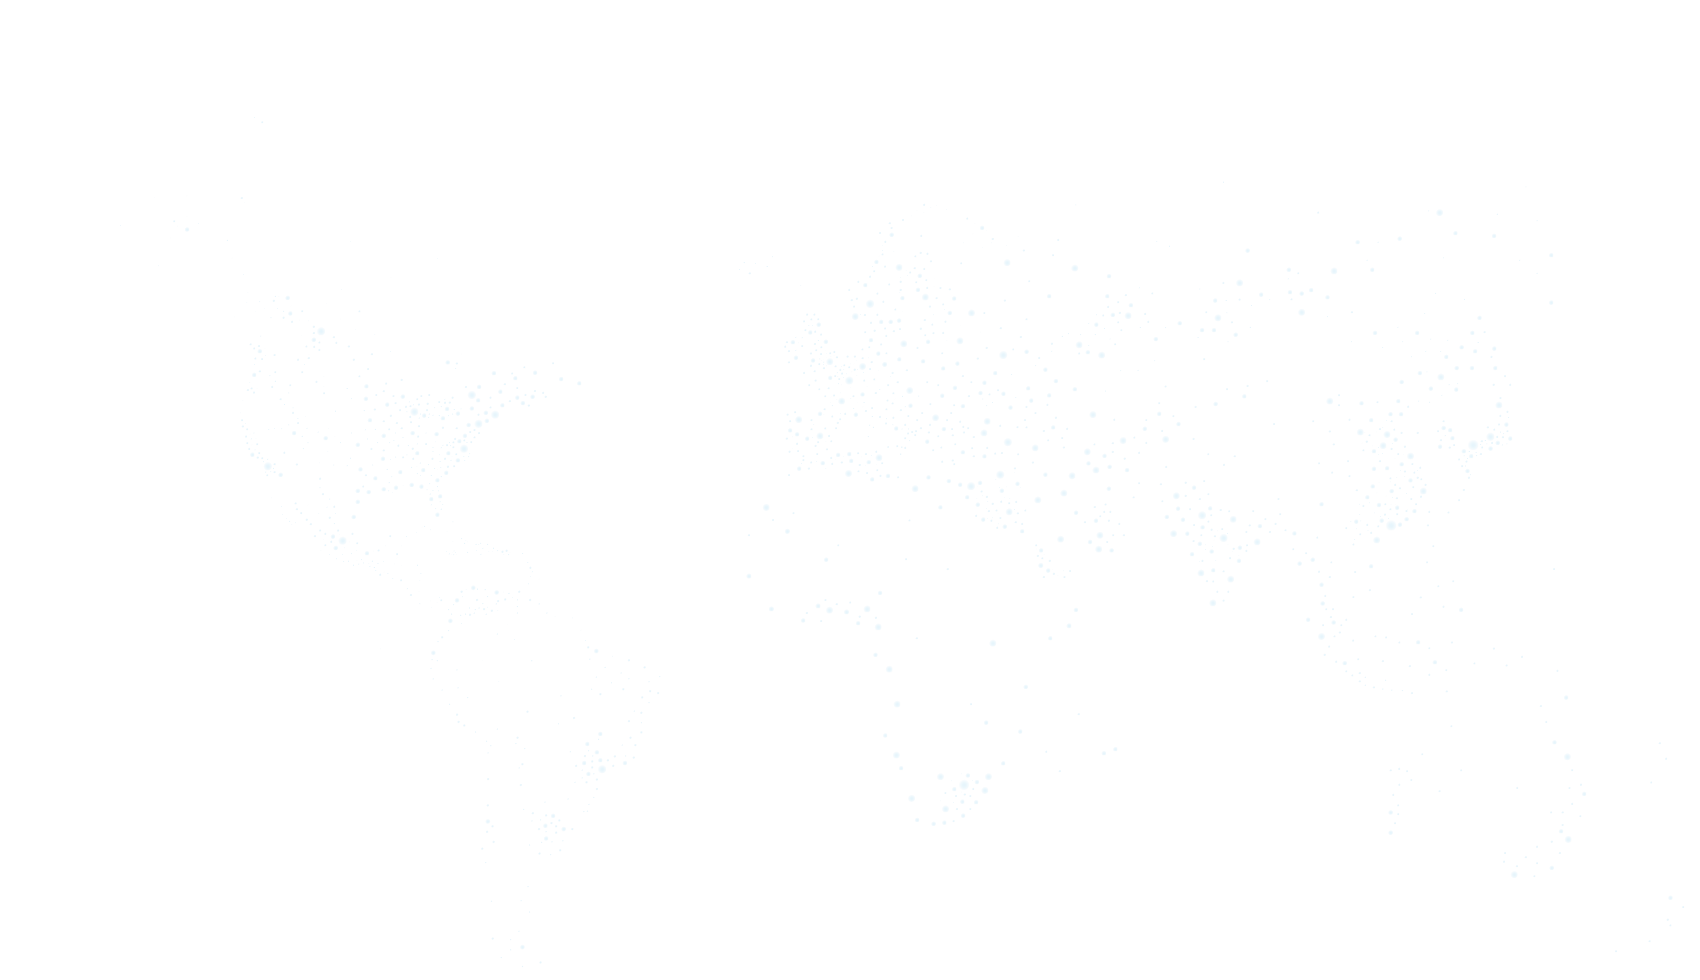 TBR Global locations